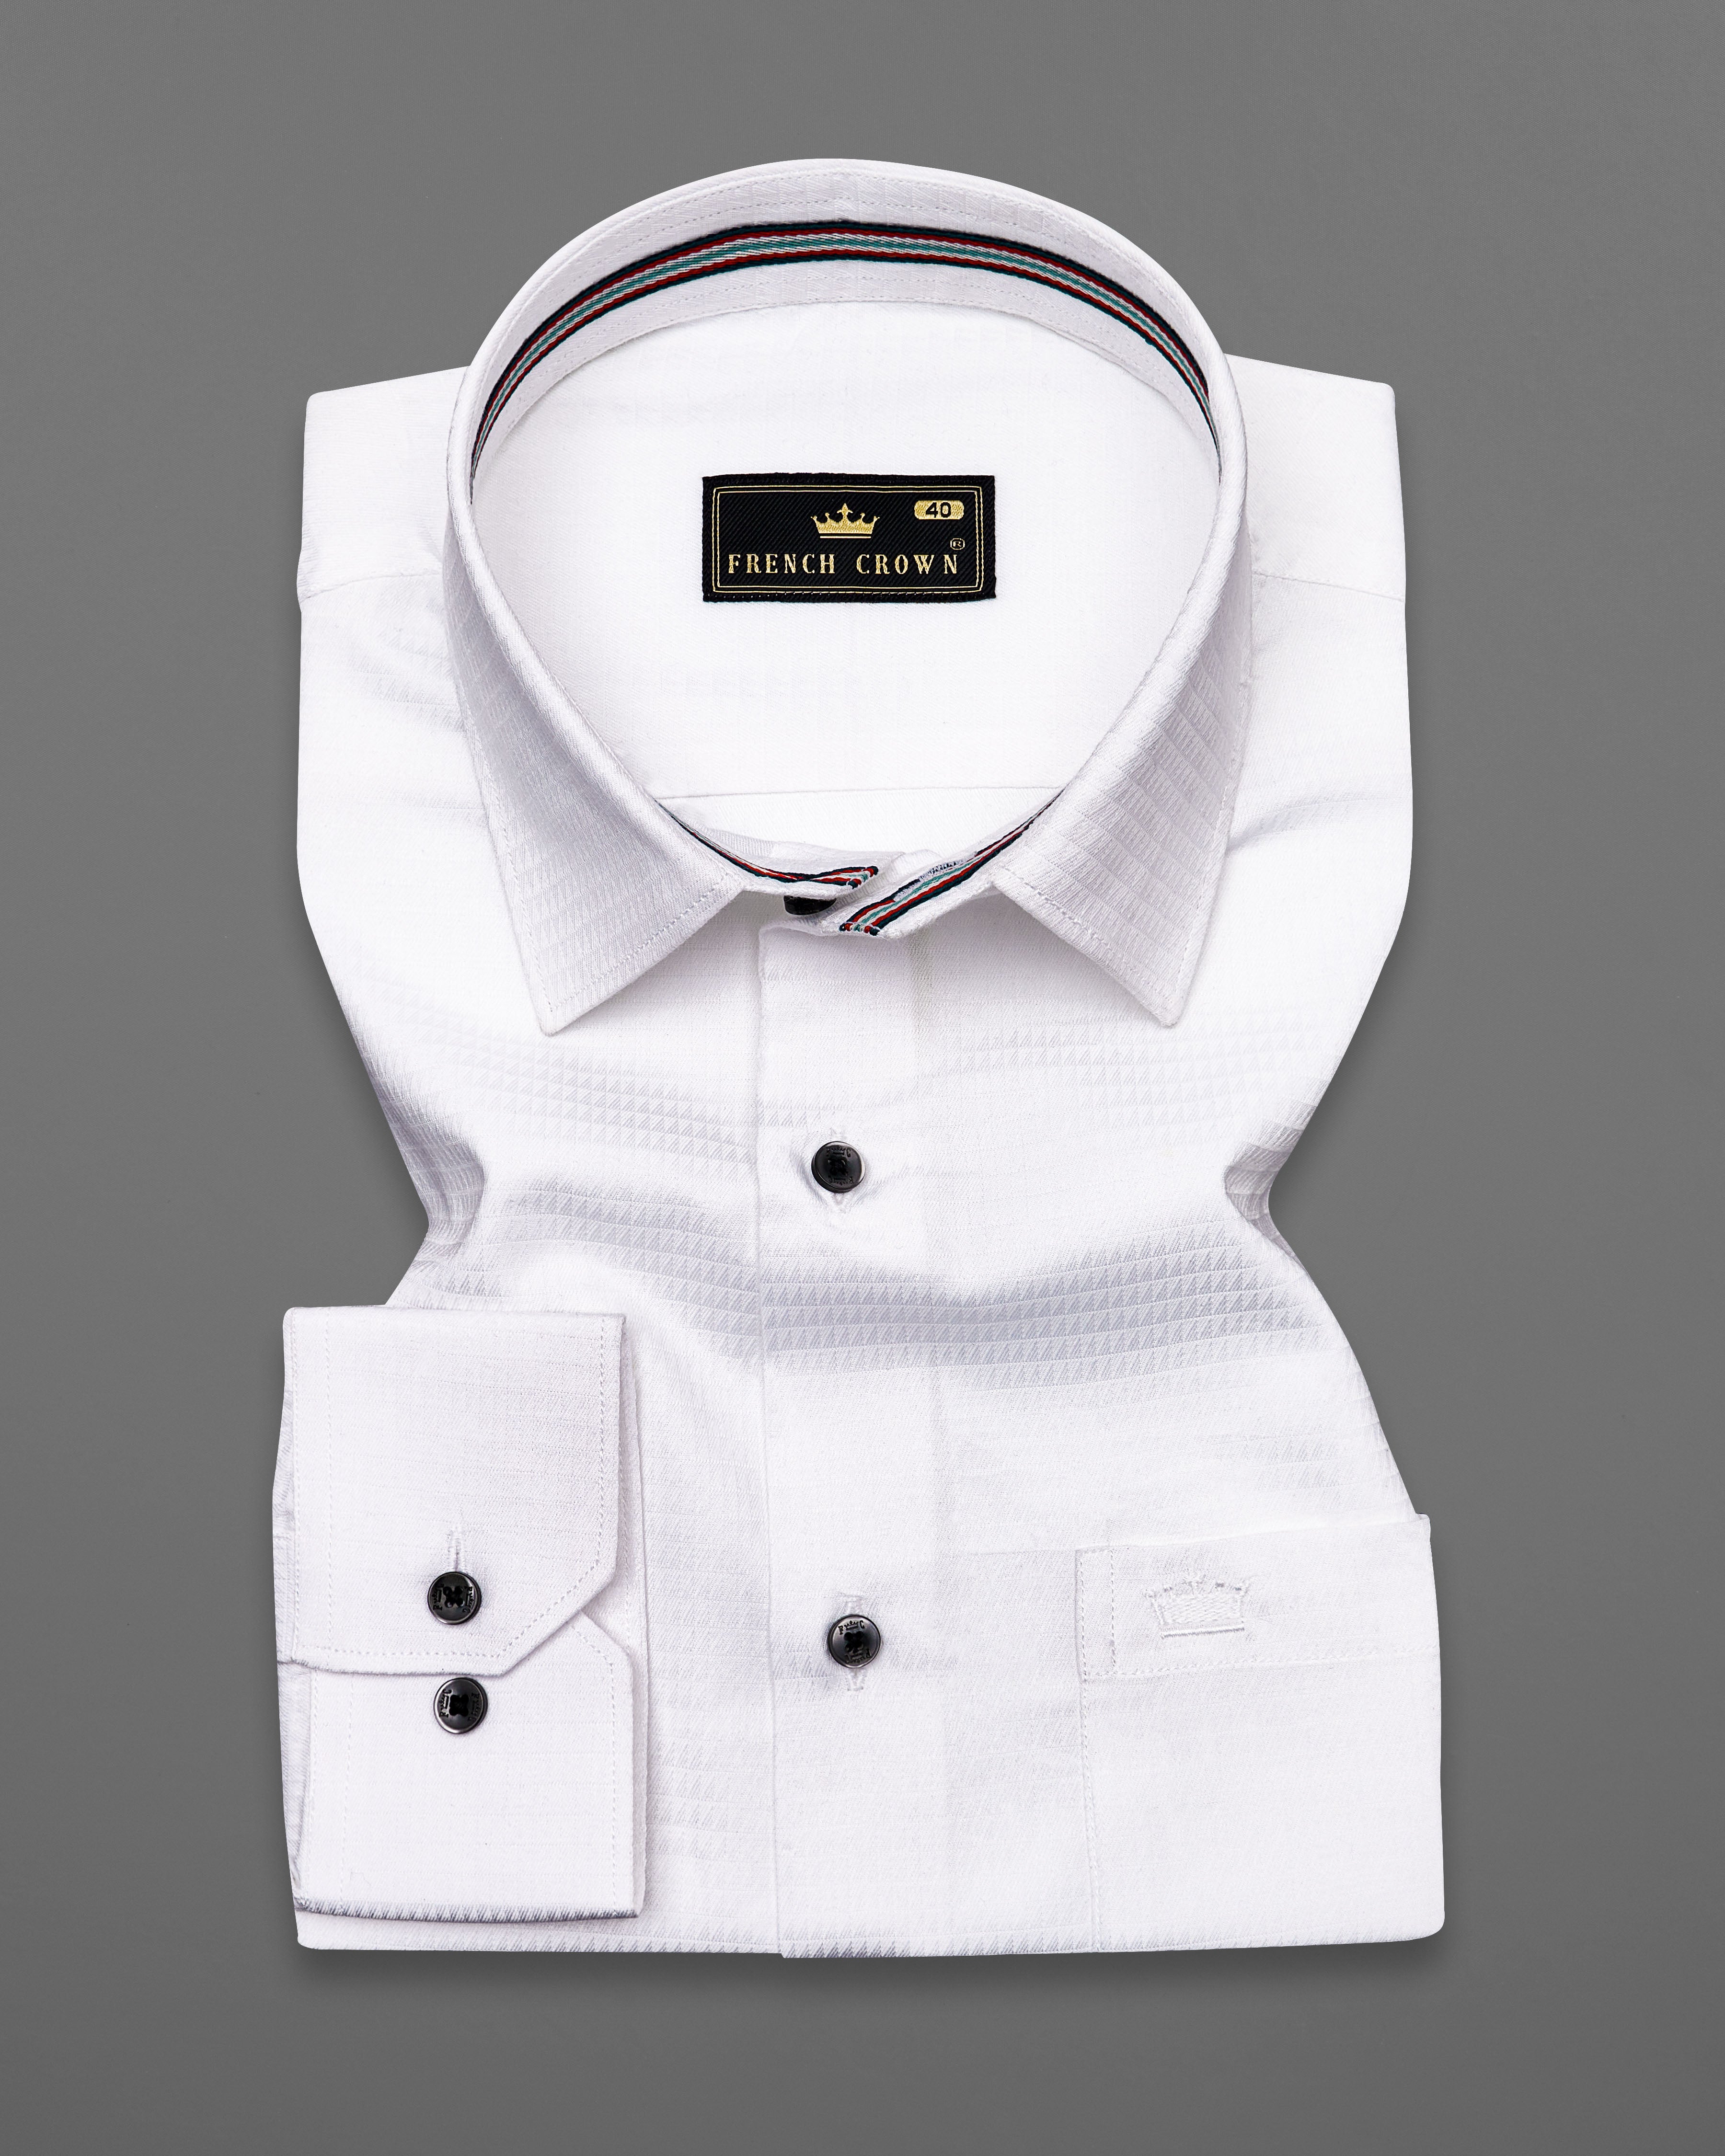 Bright White with Multicolour Striped Dobby Textured Premium Giza Cotton Designer Shirt 8966-BLK-P582-38, 8966-BLK-P582-H-38, 8966-BLK-P582-39, 8966-BLK-P582-H-39, 8966-BLK-P582-40, 8966-BLK-P582-H-40, 8966-BLK-P582-42, 8966-BLK-P582-H-42, 8966-BLK-P582-44, 8966-BLK-P582-H-44, 8966-BLK-P582-46, 8966-BLK-P582-H-46, 8966-BLK-P582-48, 8966-BLK-P582-H-48, 8966-BLK-P582-50, 8966-BLK-P582-H-50, 8966-BLK-P582-52, 8966-BLK-P582-H-52